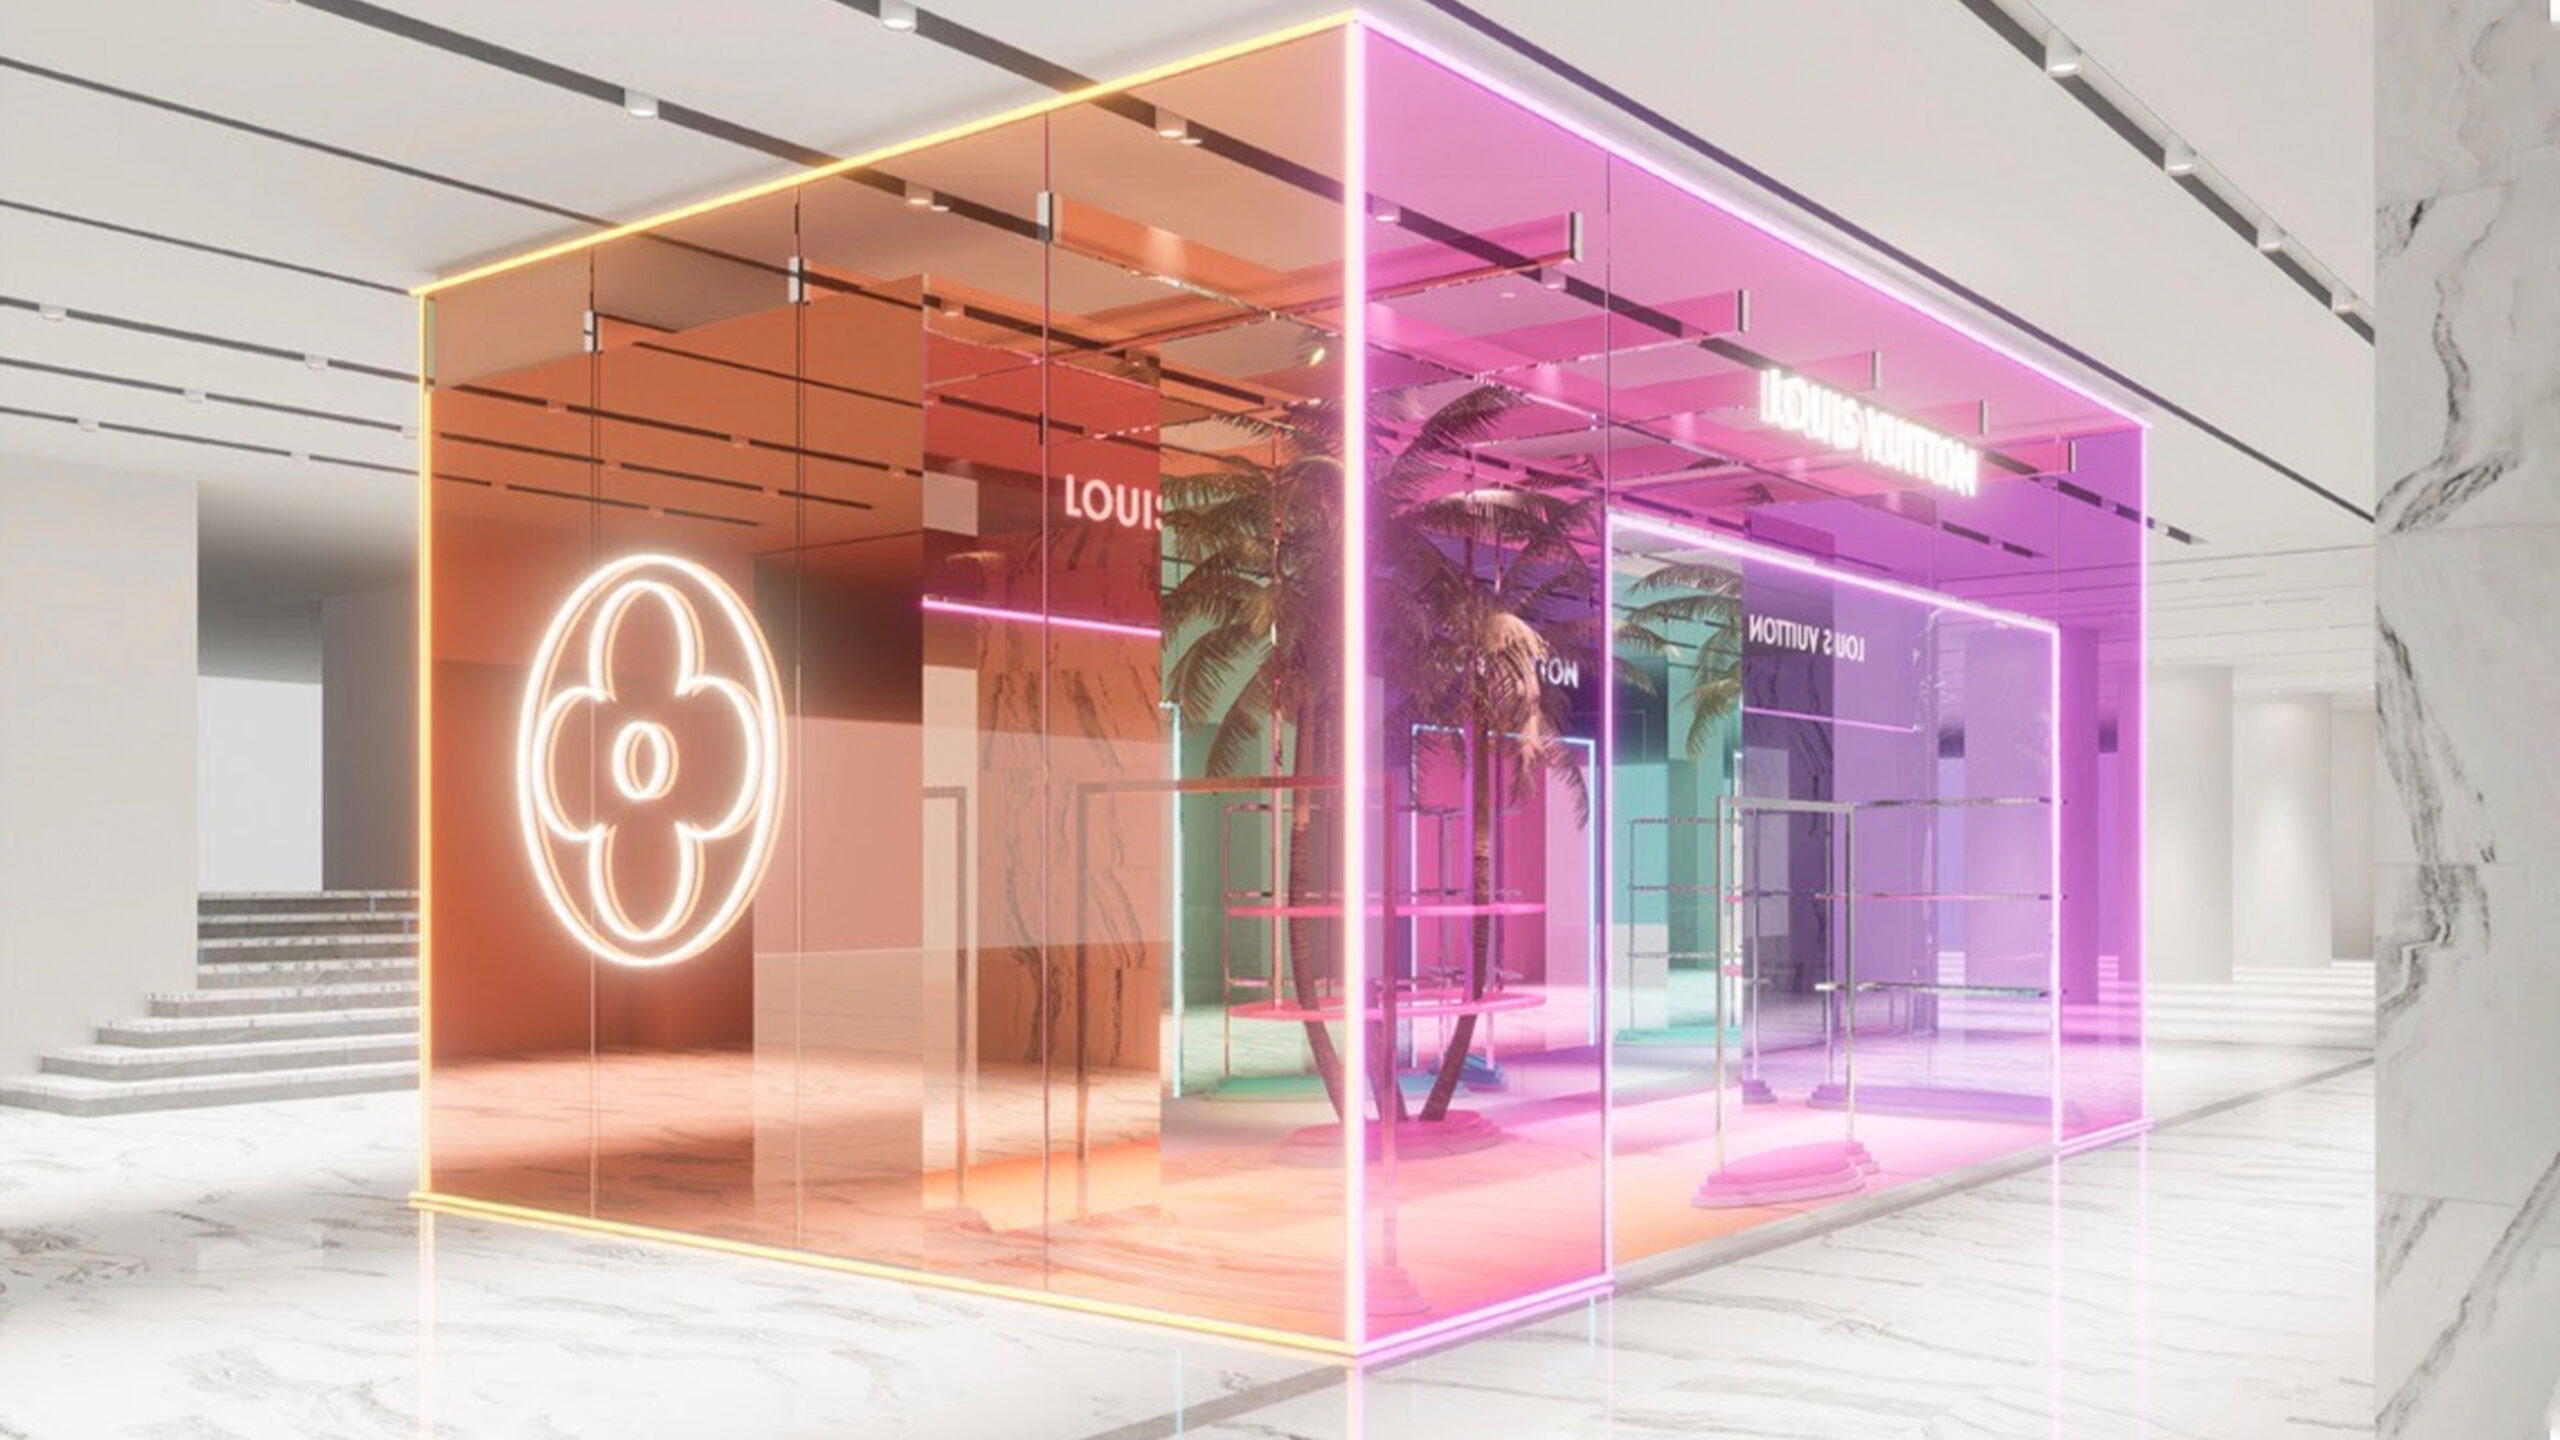 Louis Vuitton opens a new pop-up store in AMSTERDAM DE BIJENKORF - Numéro  Netherlands